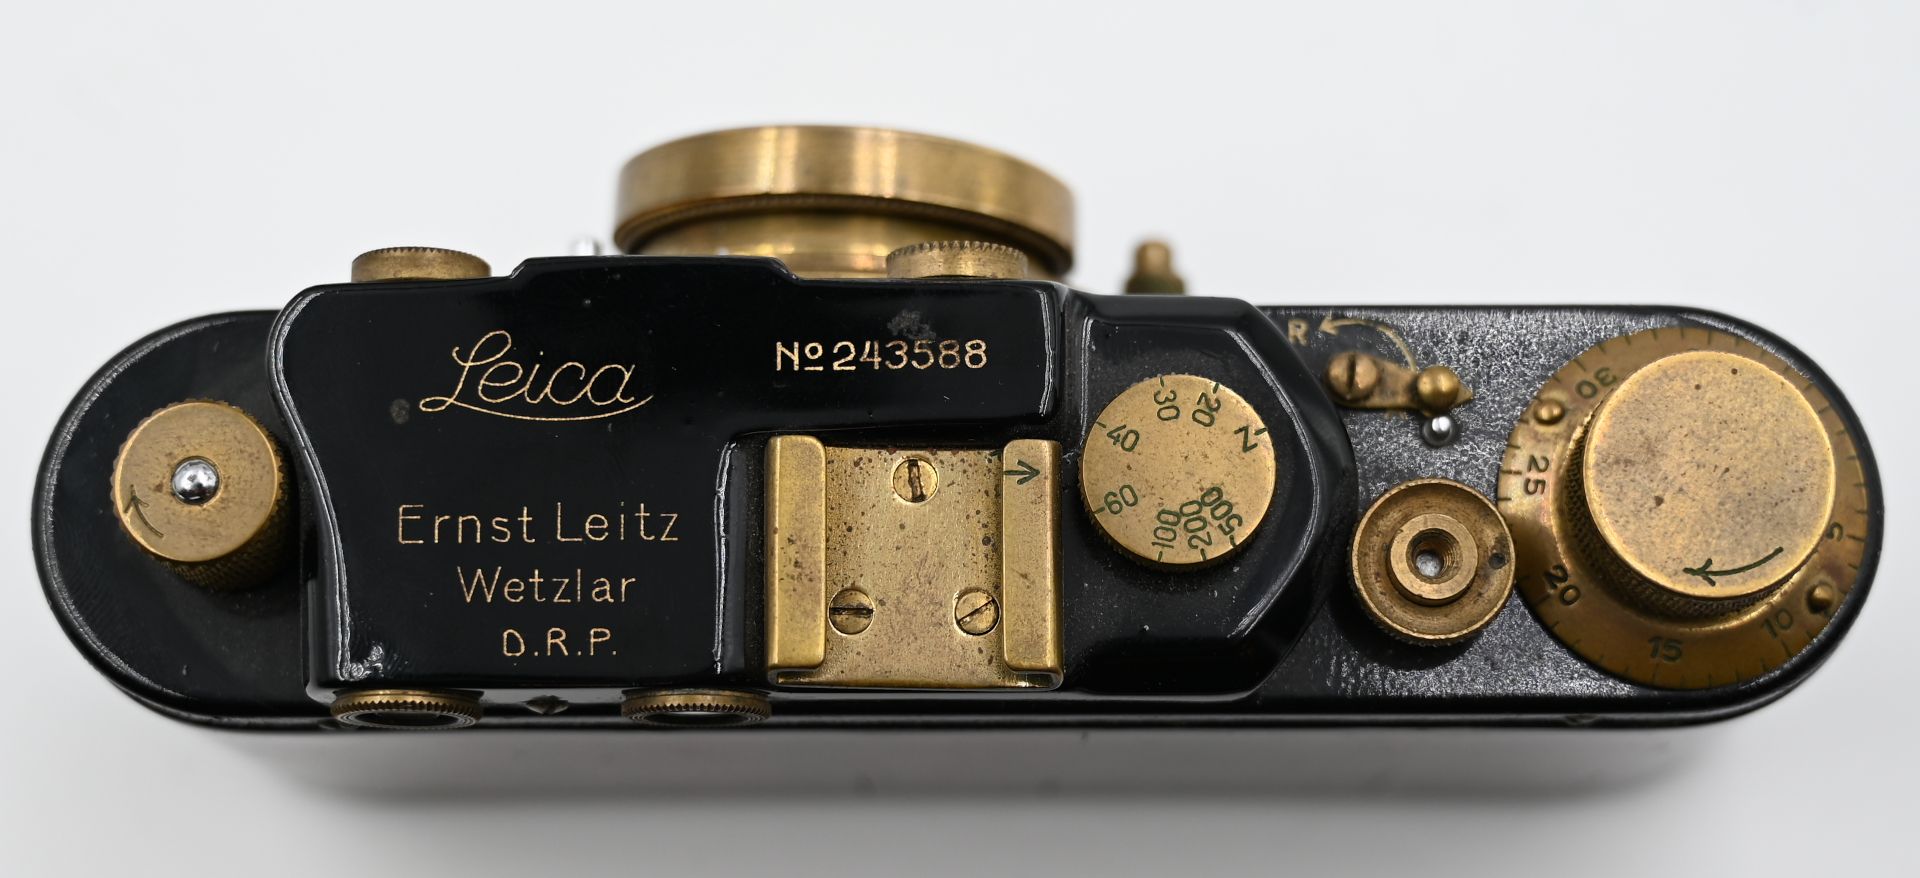 1 Fotoapparat LEICA "II" wohl 1937/1938, No 243588, Ernst LEITZ, Wetzlar, Korpus in Holzoptik - Bild 2 aus 3